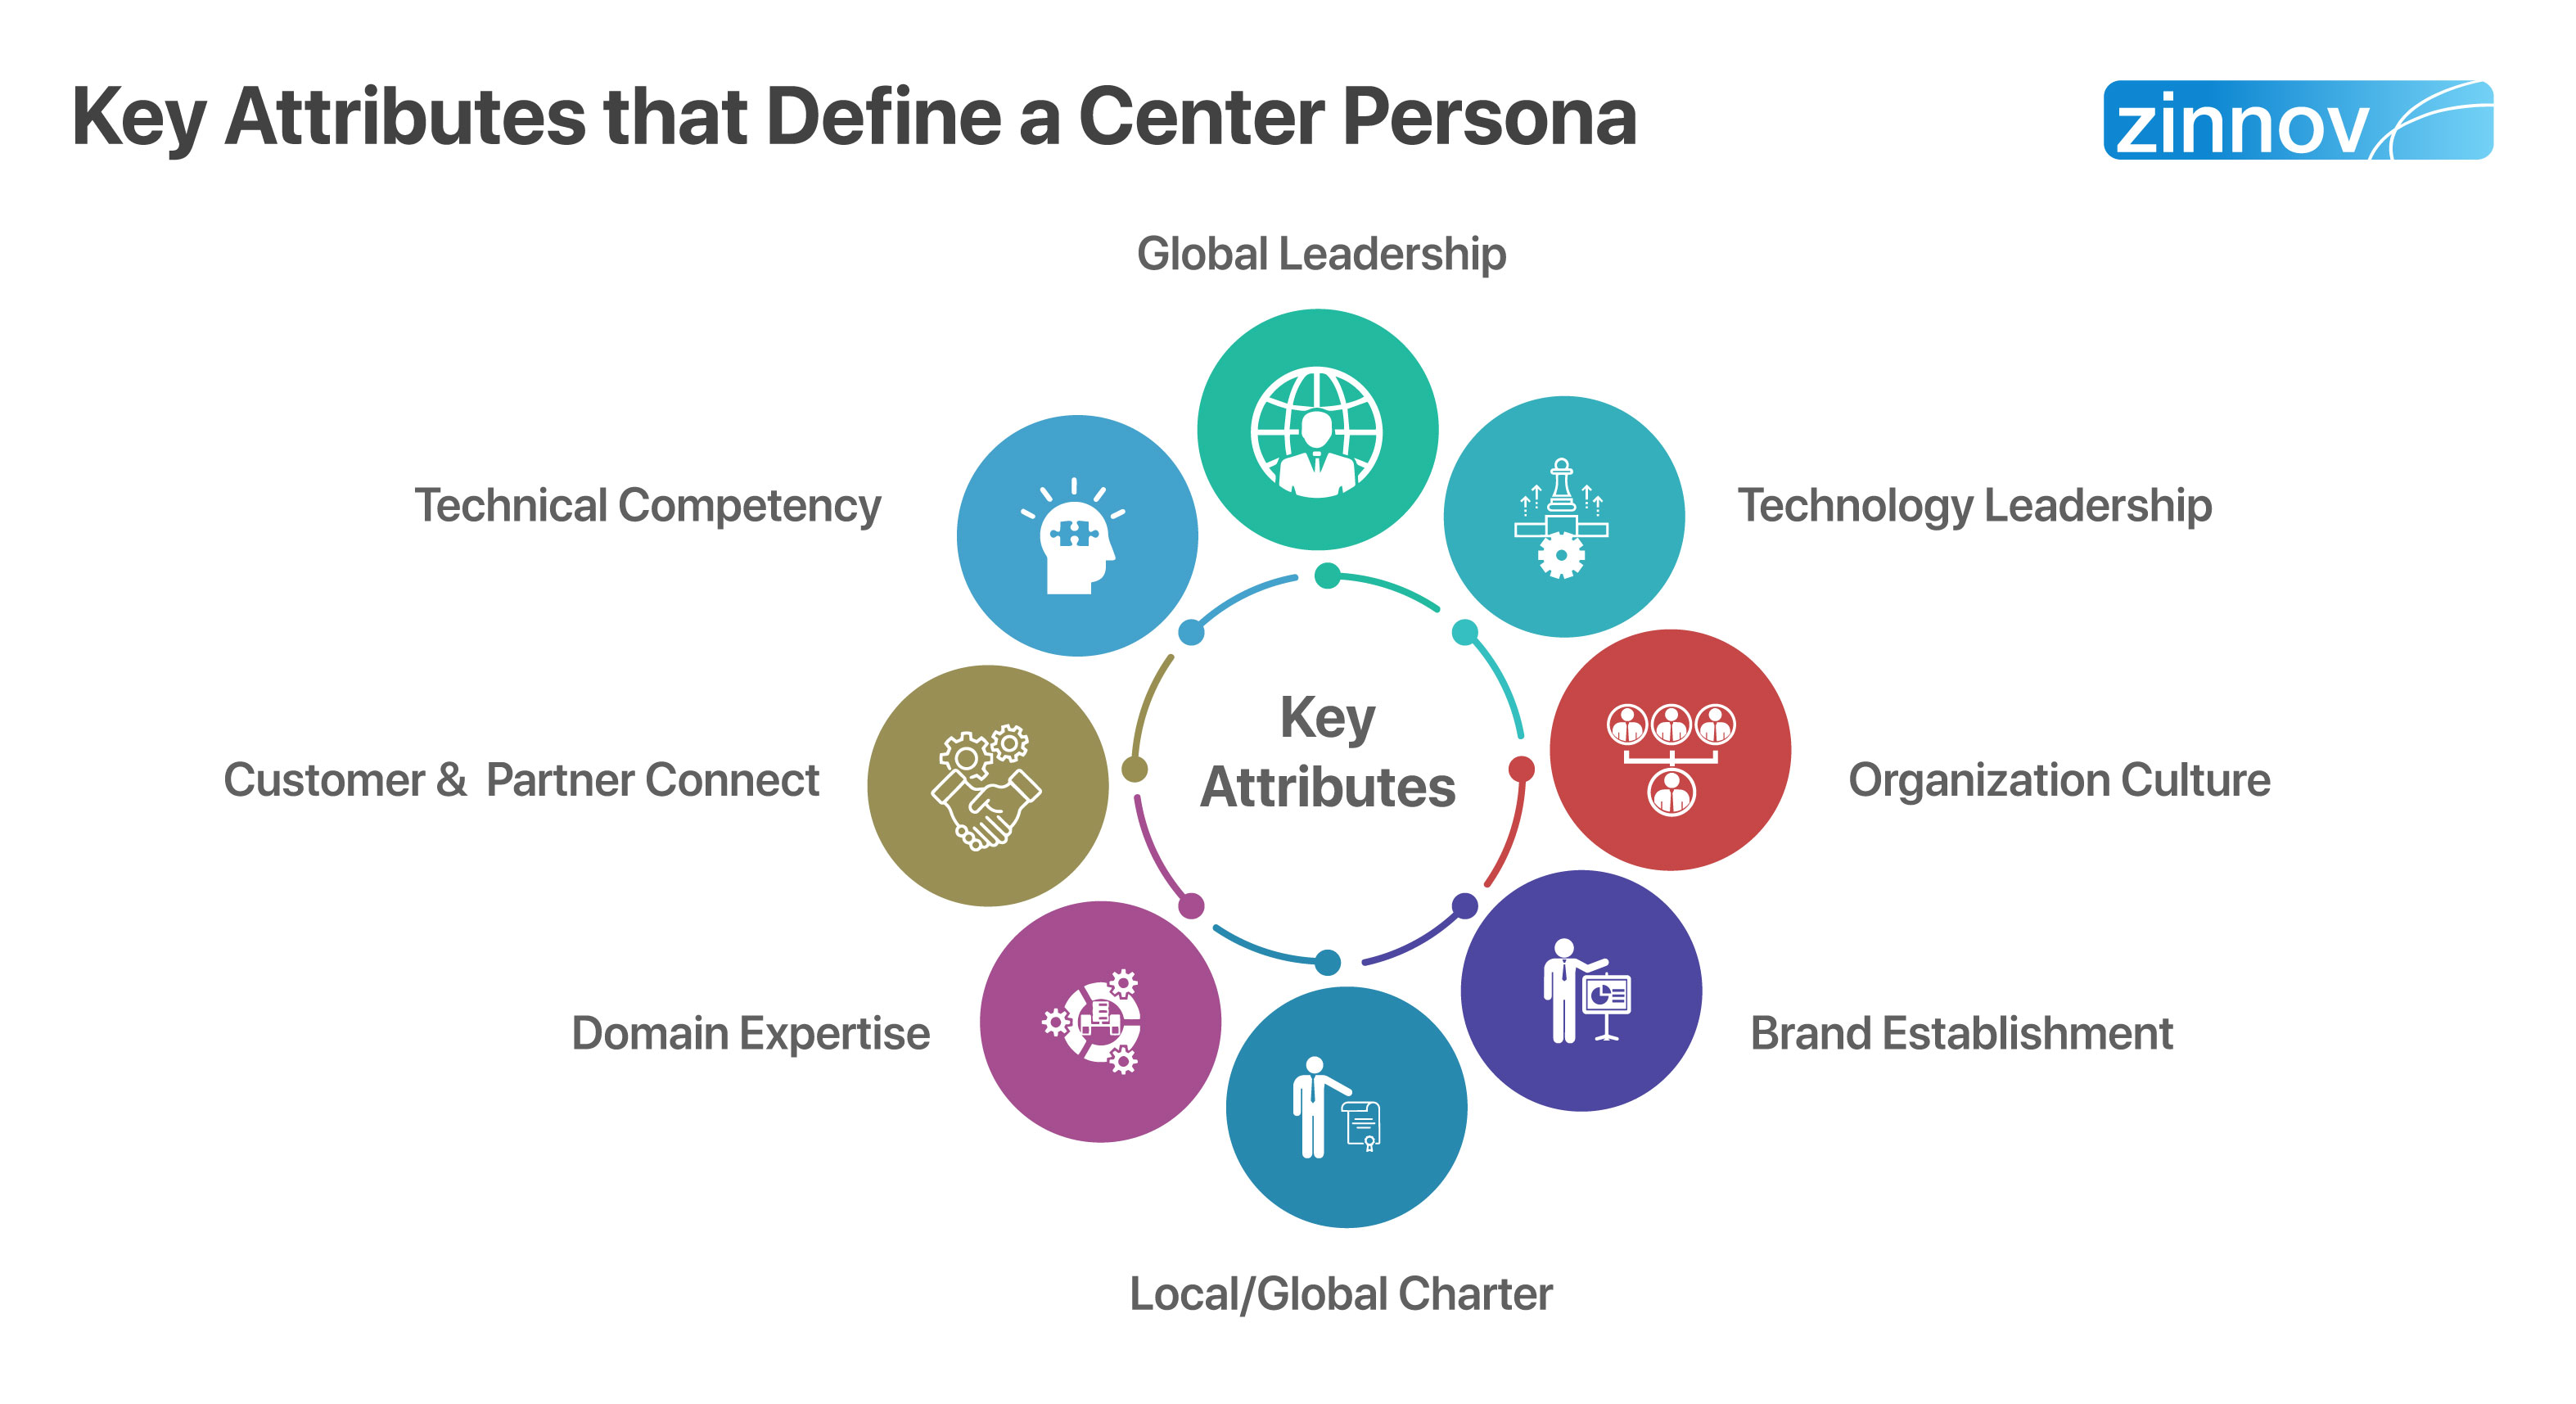 Key attributes that define a center persona